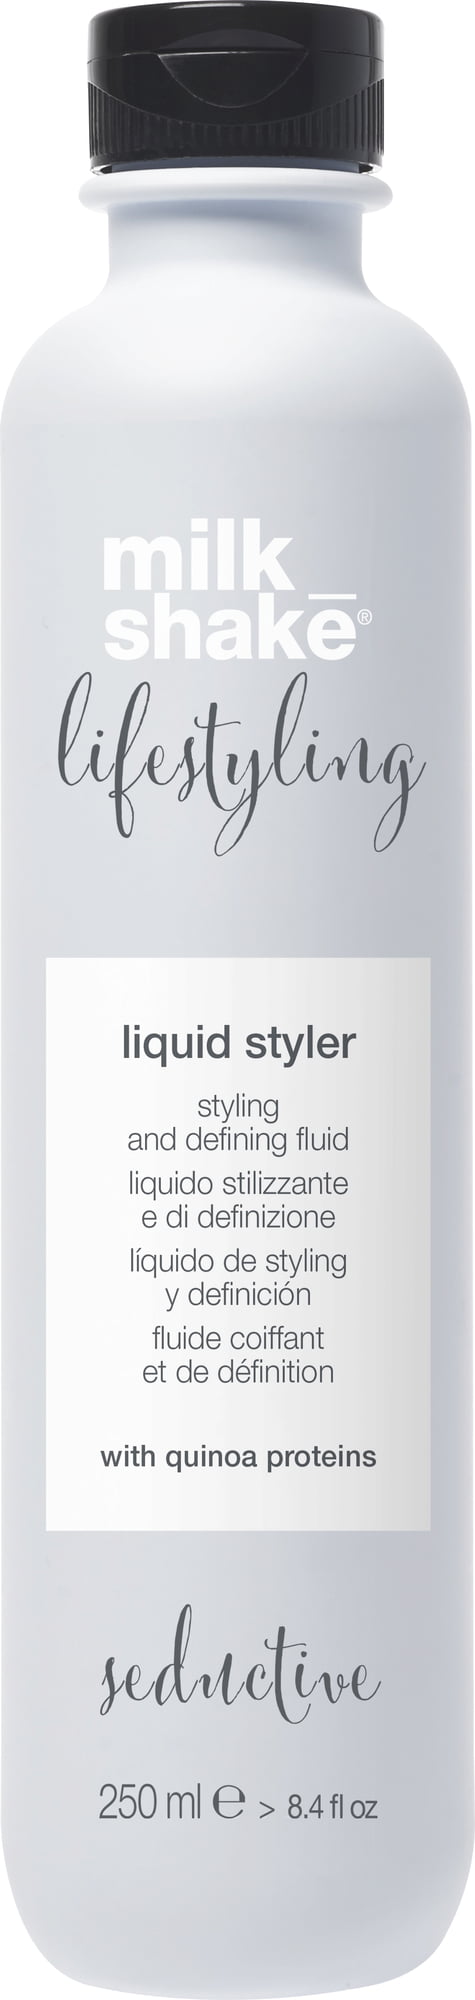 Lifestyling Liquid Styler Seductive 250 Ml